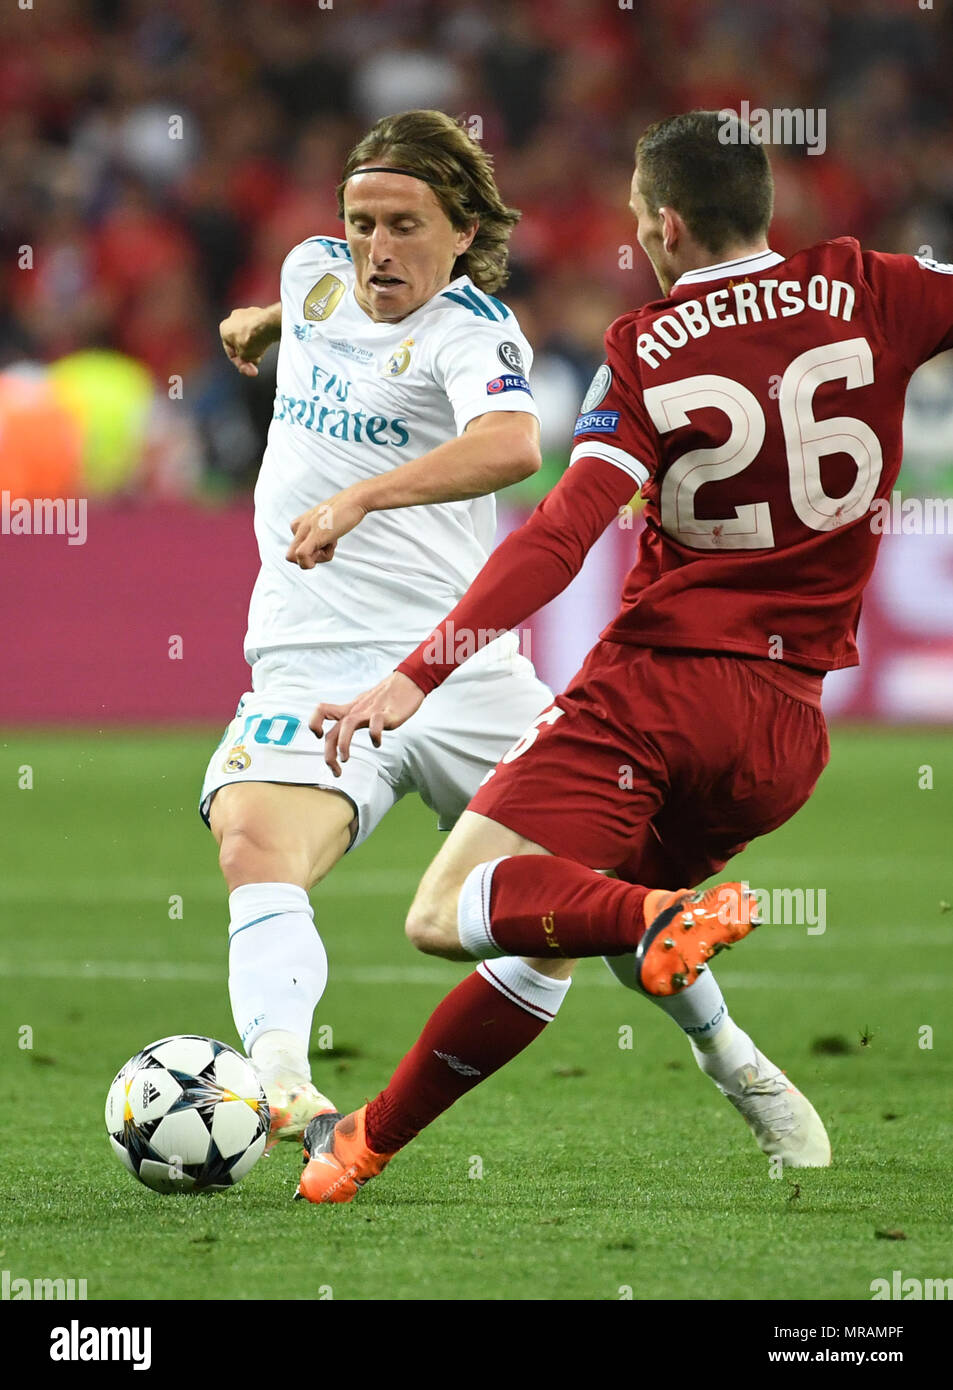 L-R) Andy Robertson (Liverpool), Luka Modric (Real), MAY 26, 2018